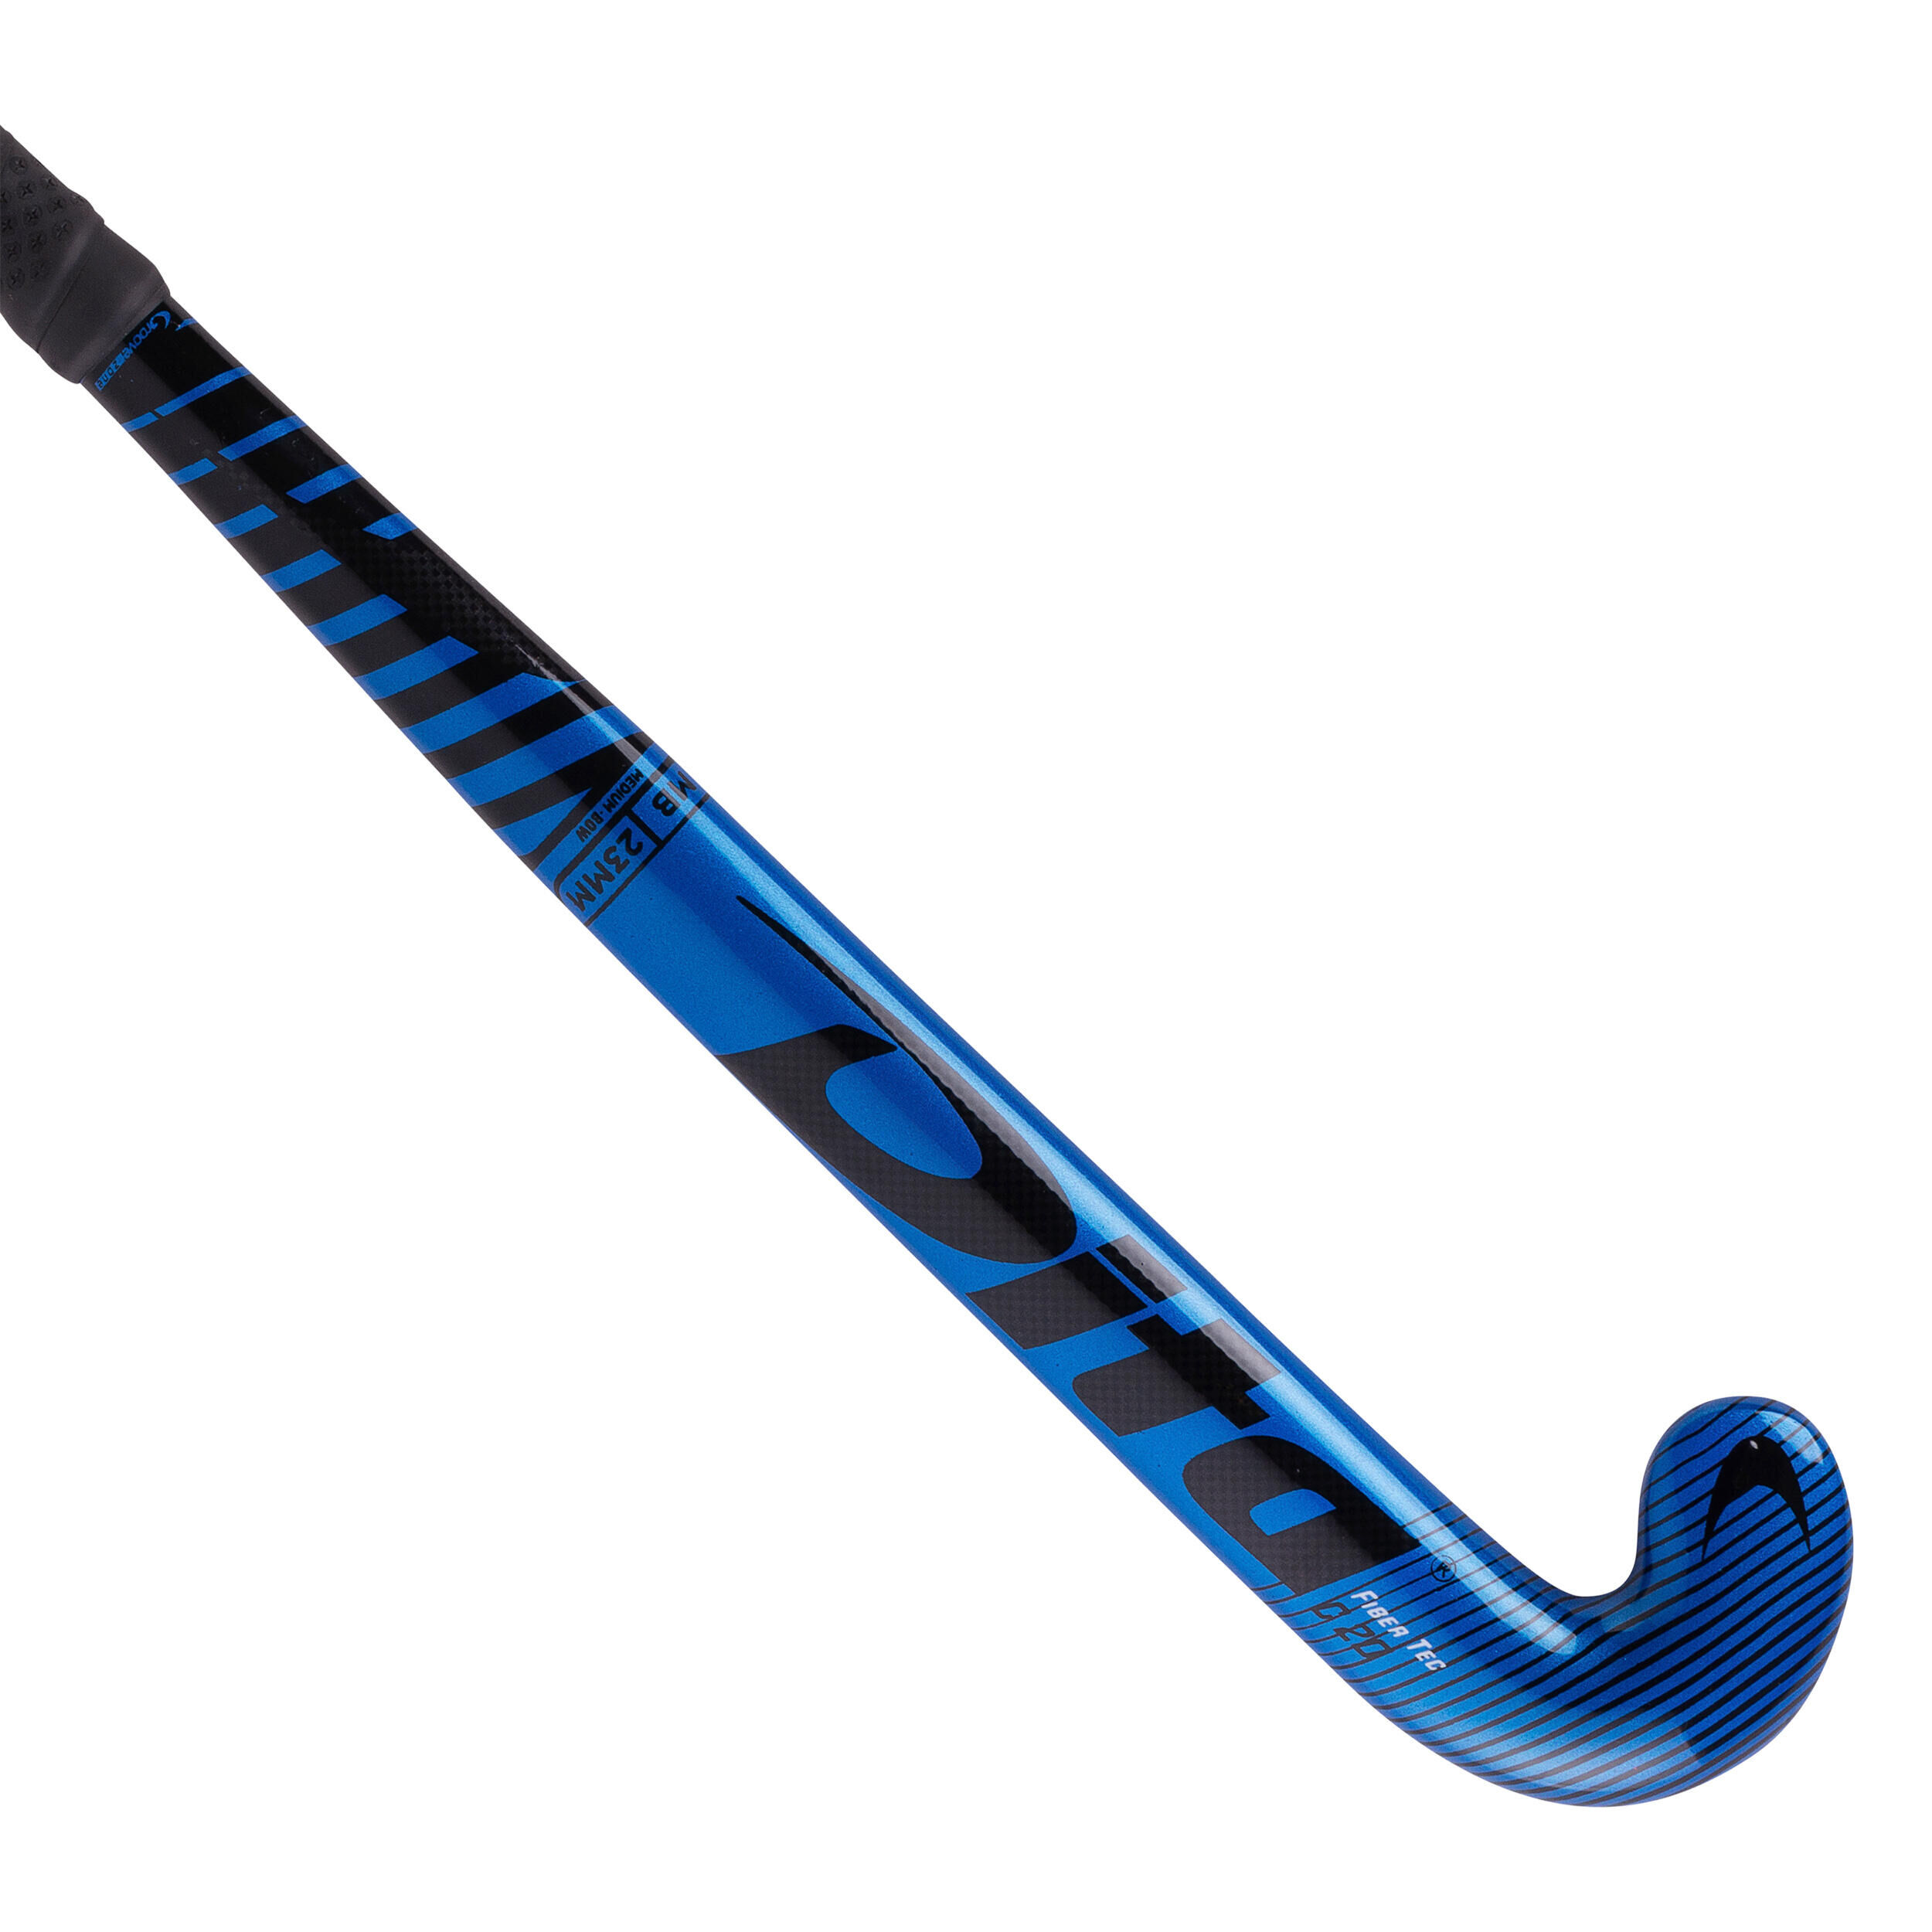 DITA Teens' 20% Carbon Mid Bow Field Hockey Stick Fibertec C20 - Blue/Black